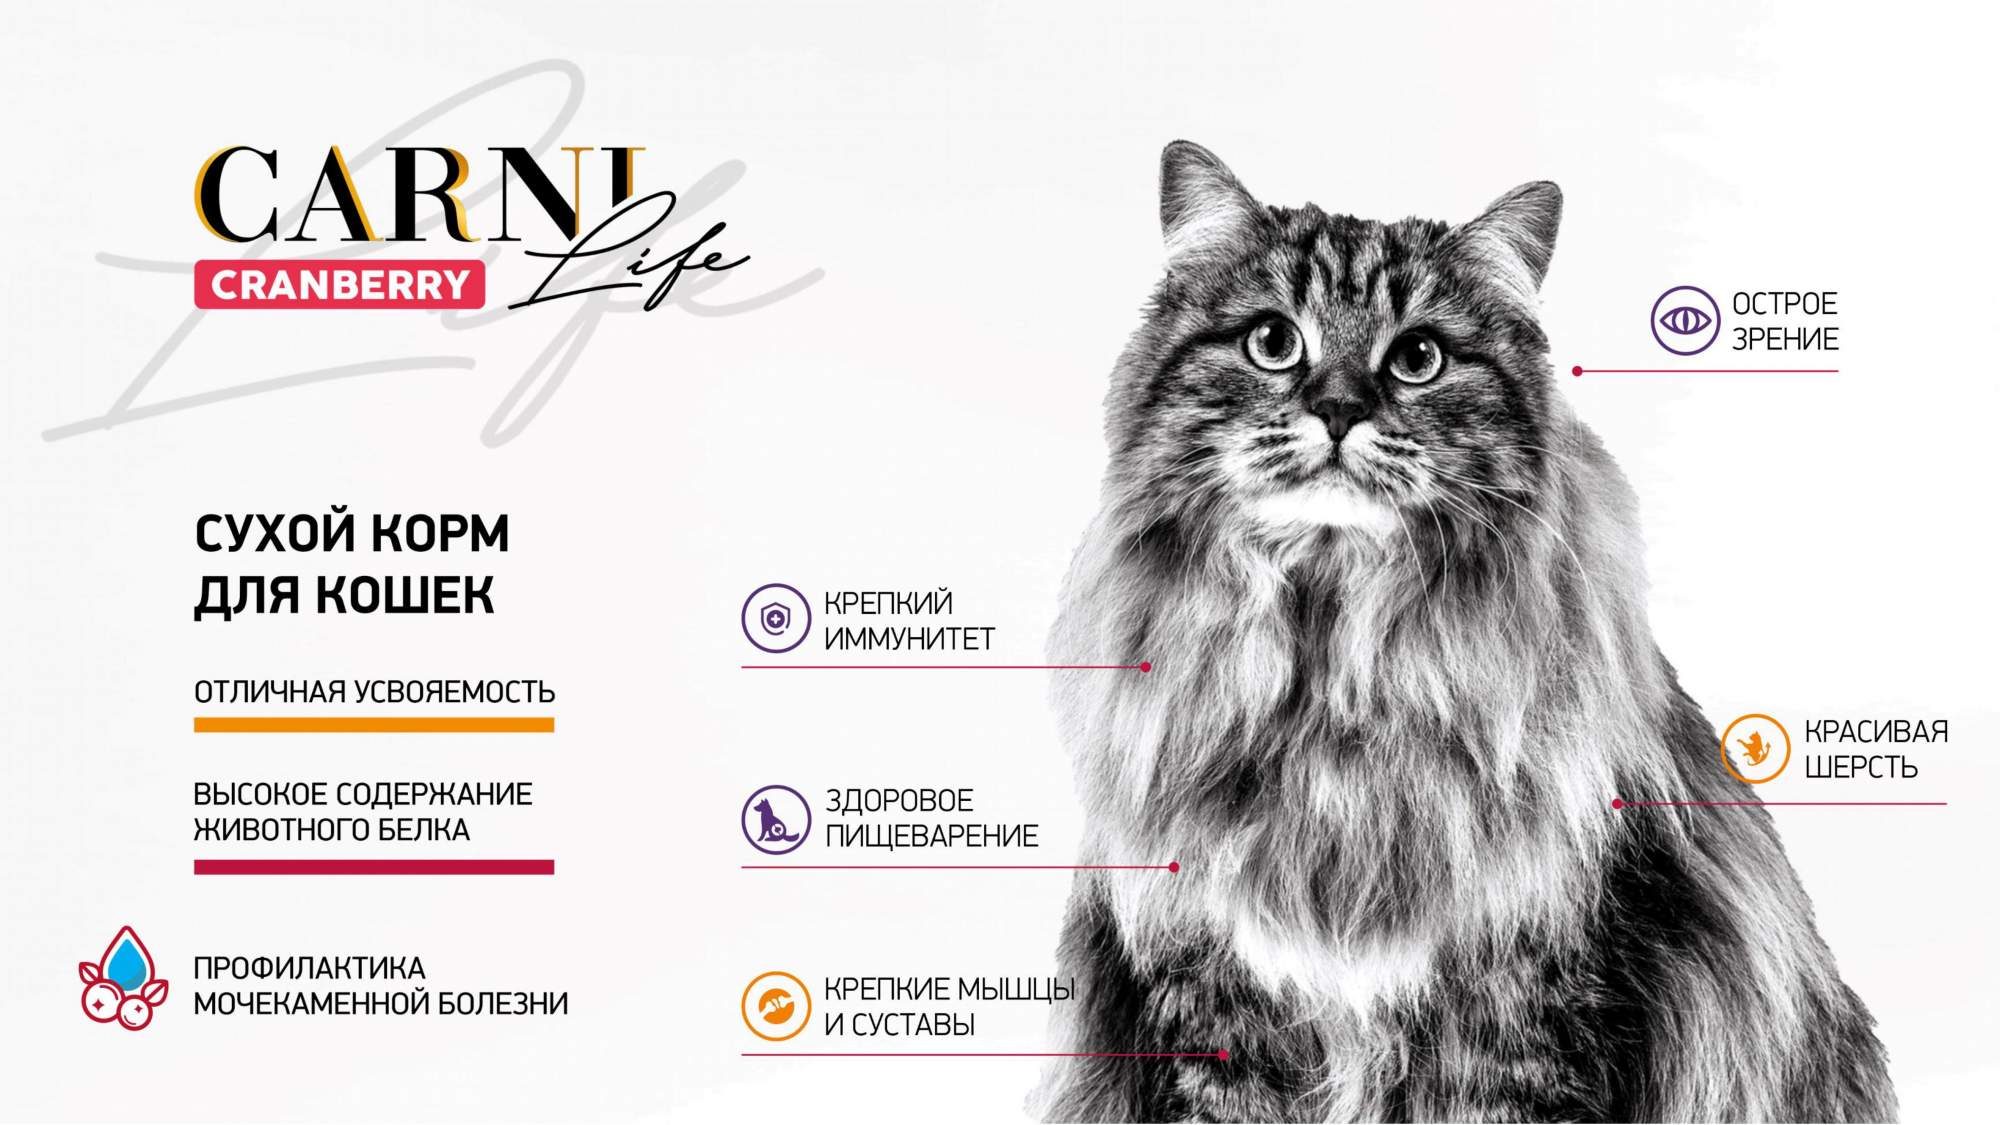 турецкие корма Carni Life для котов